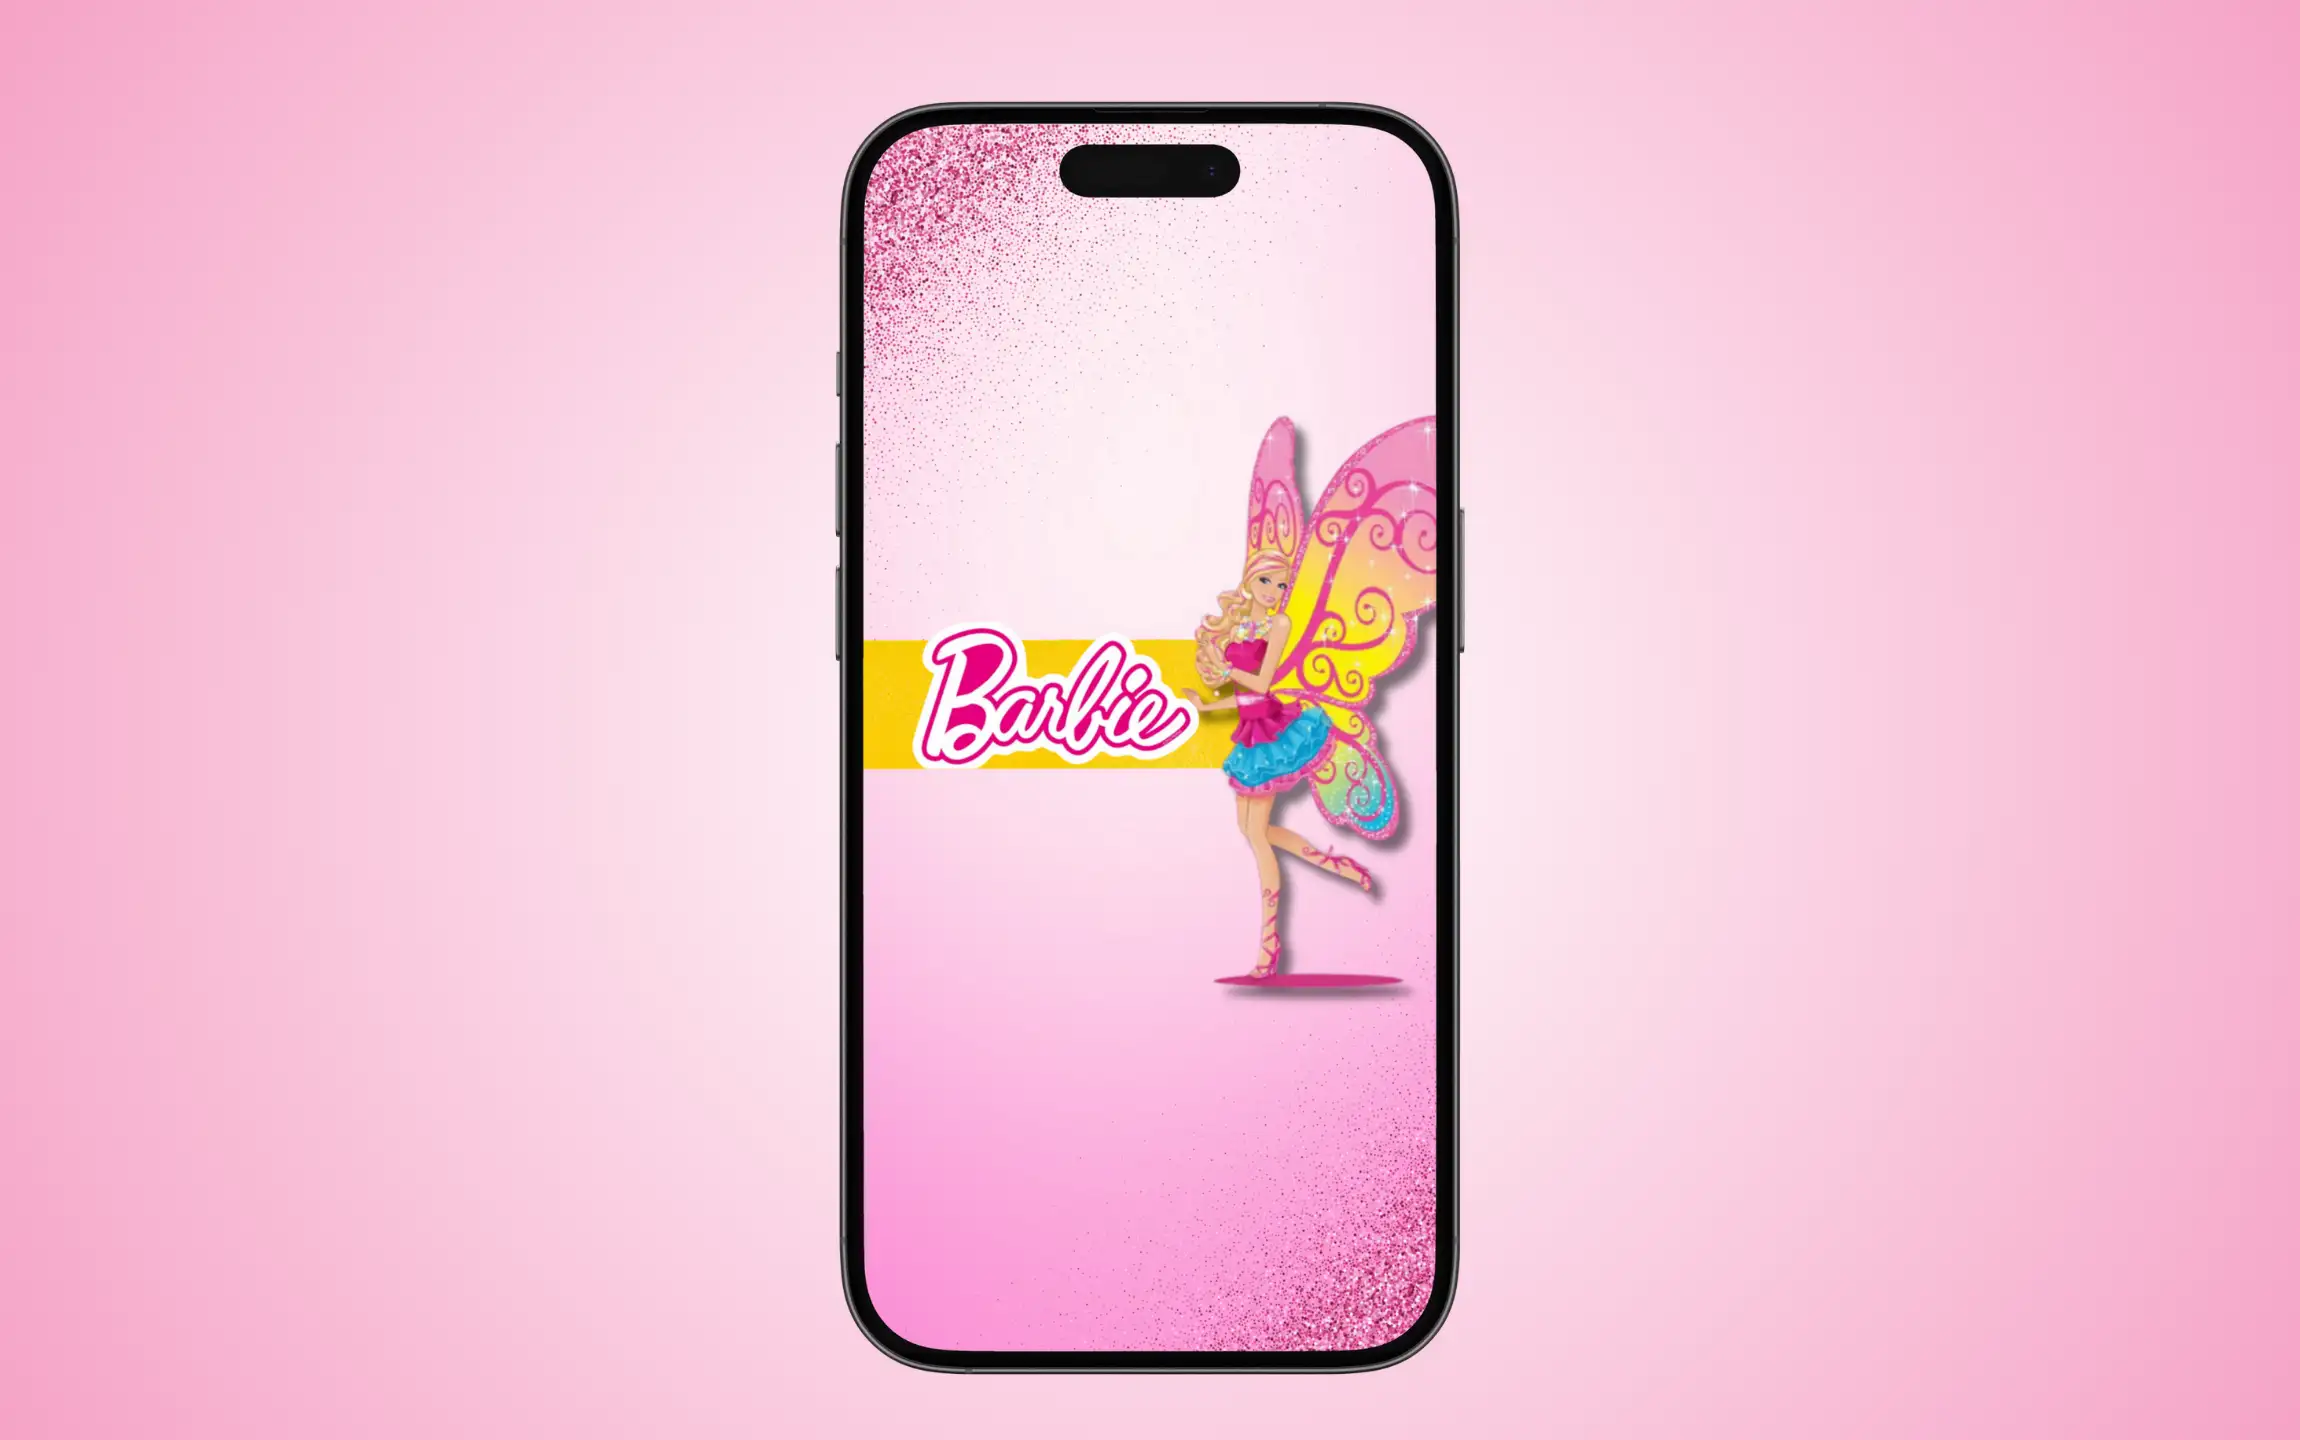 Barbie mariposa wallpaper for iPhone